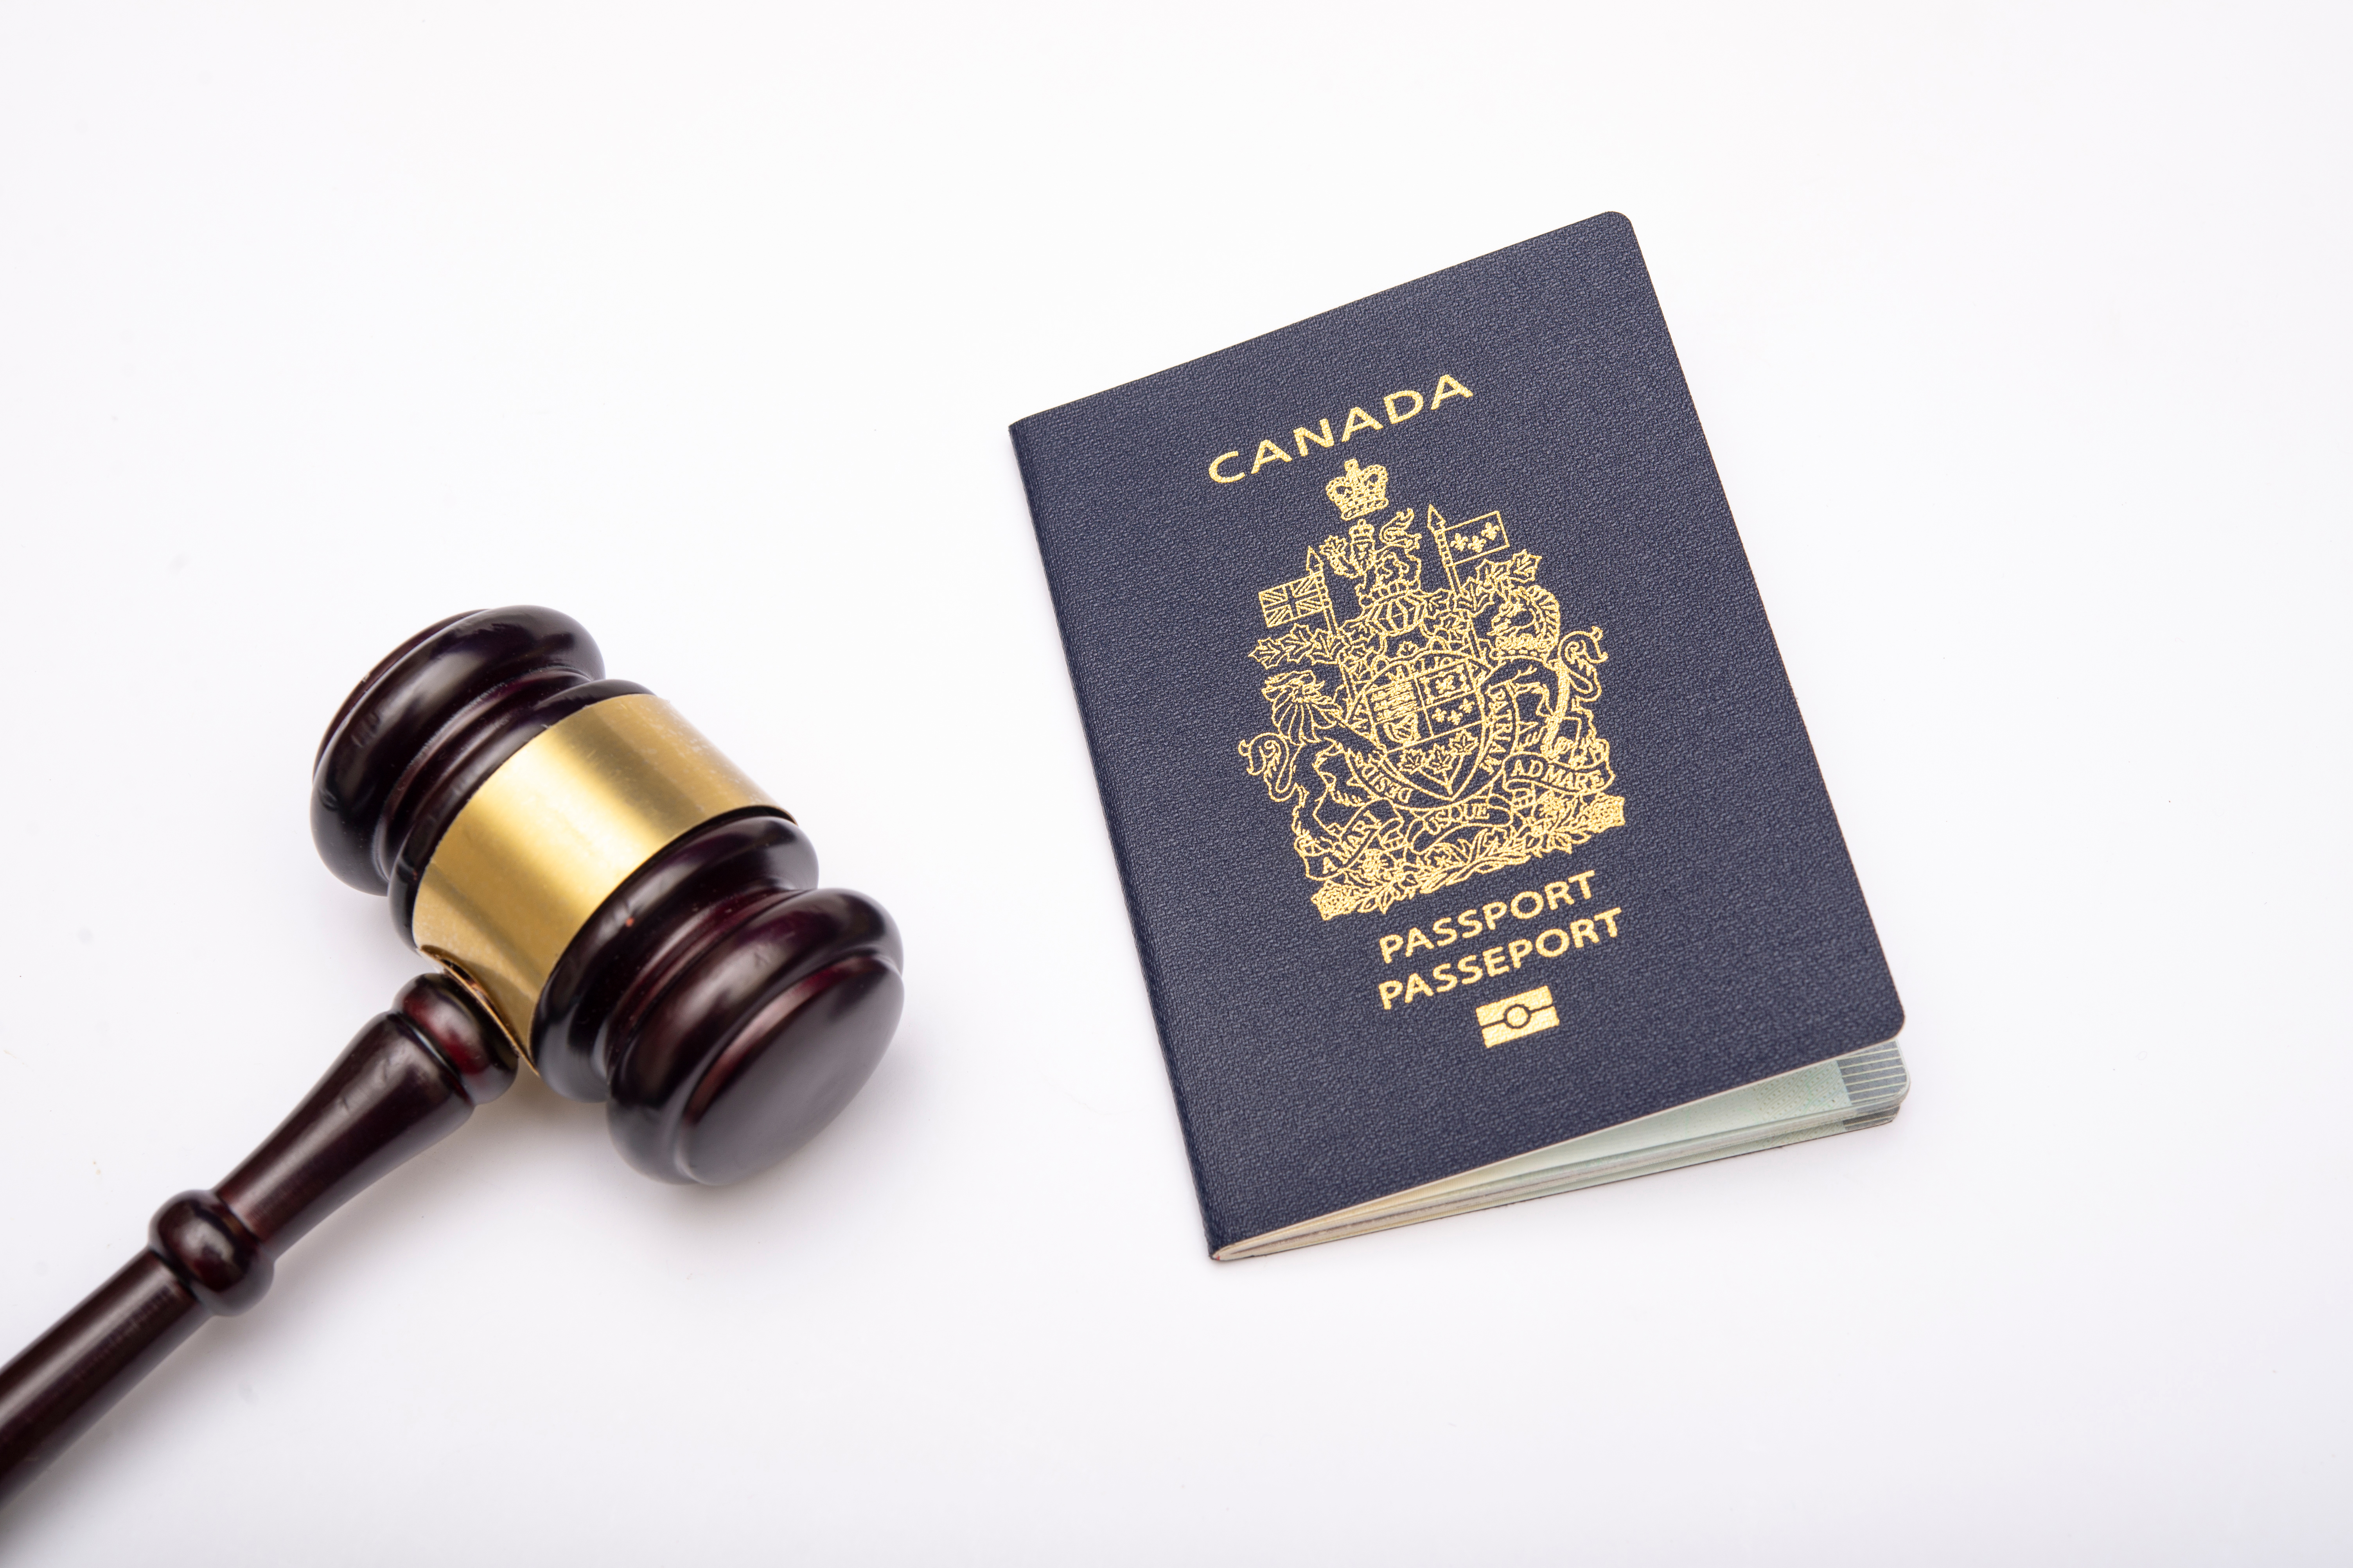 Canadian passport and gavel symbolize Canadian citizenship